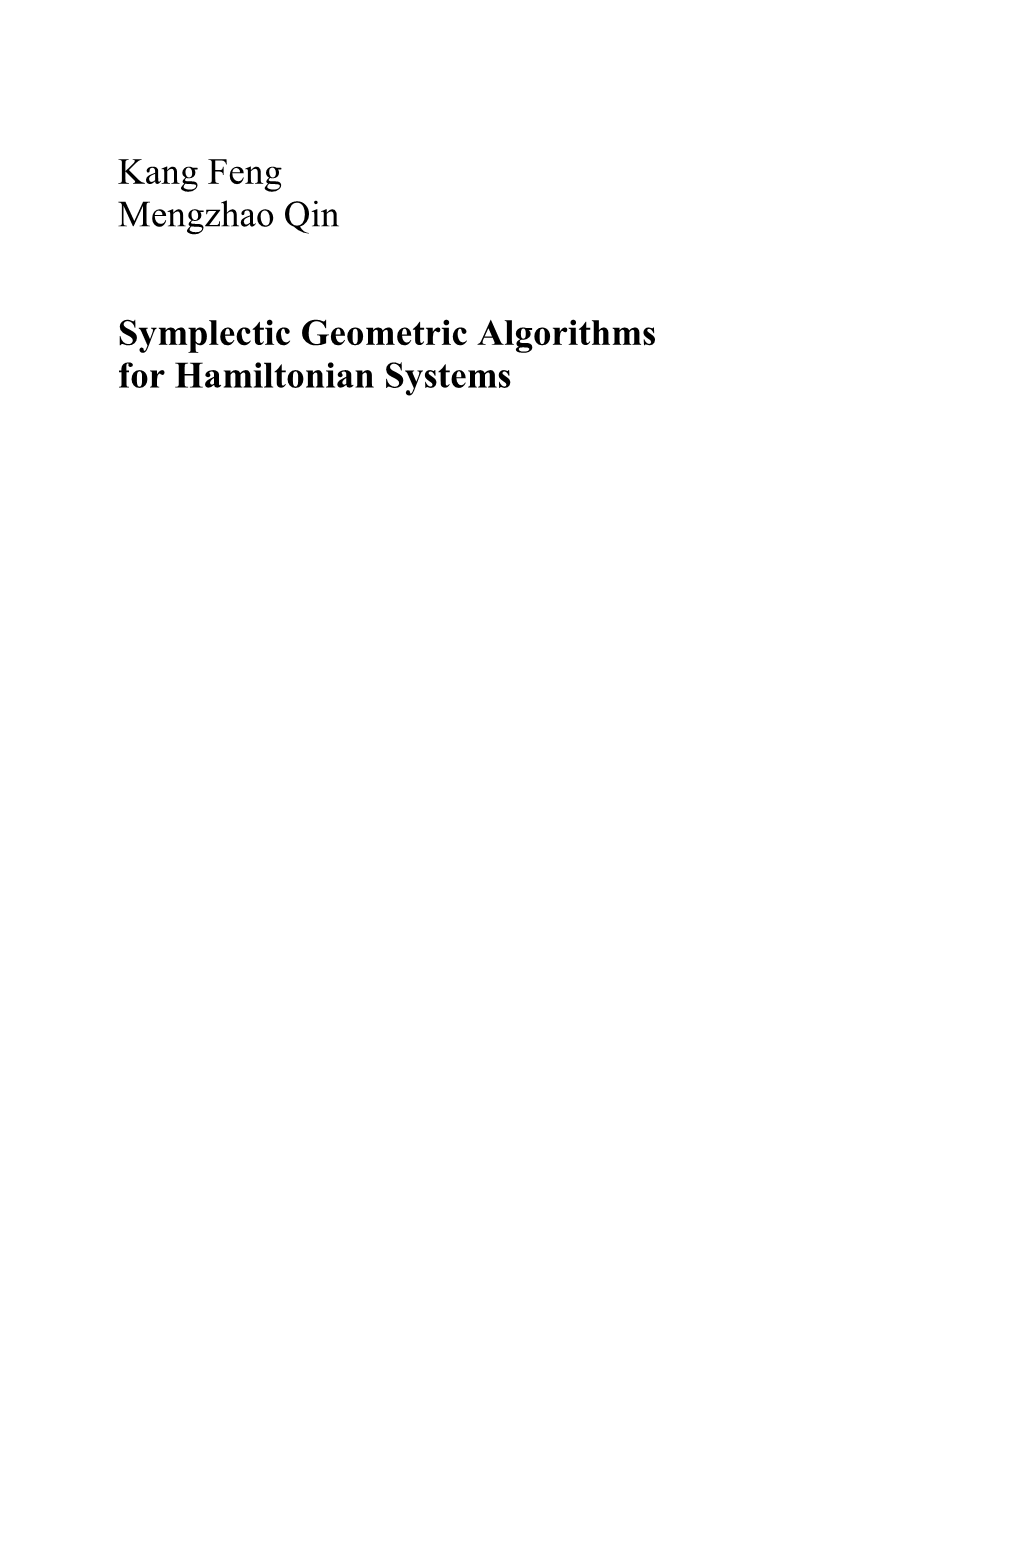 Kang Feng Mengzhao Qin Symplectic Geometric Algorithms For